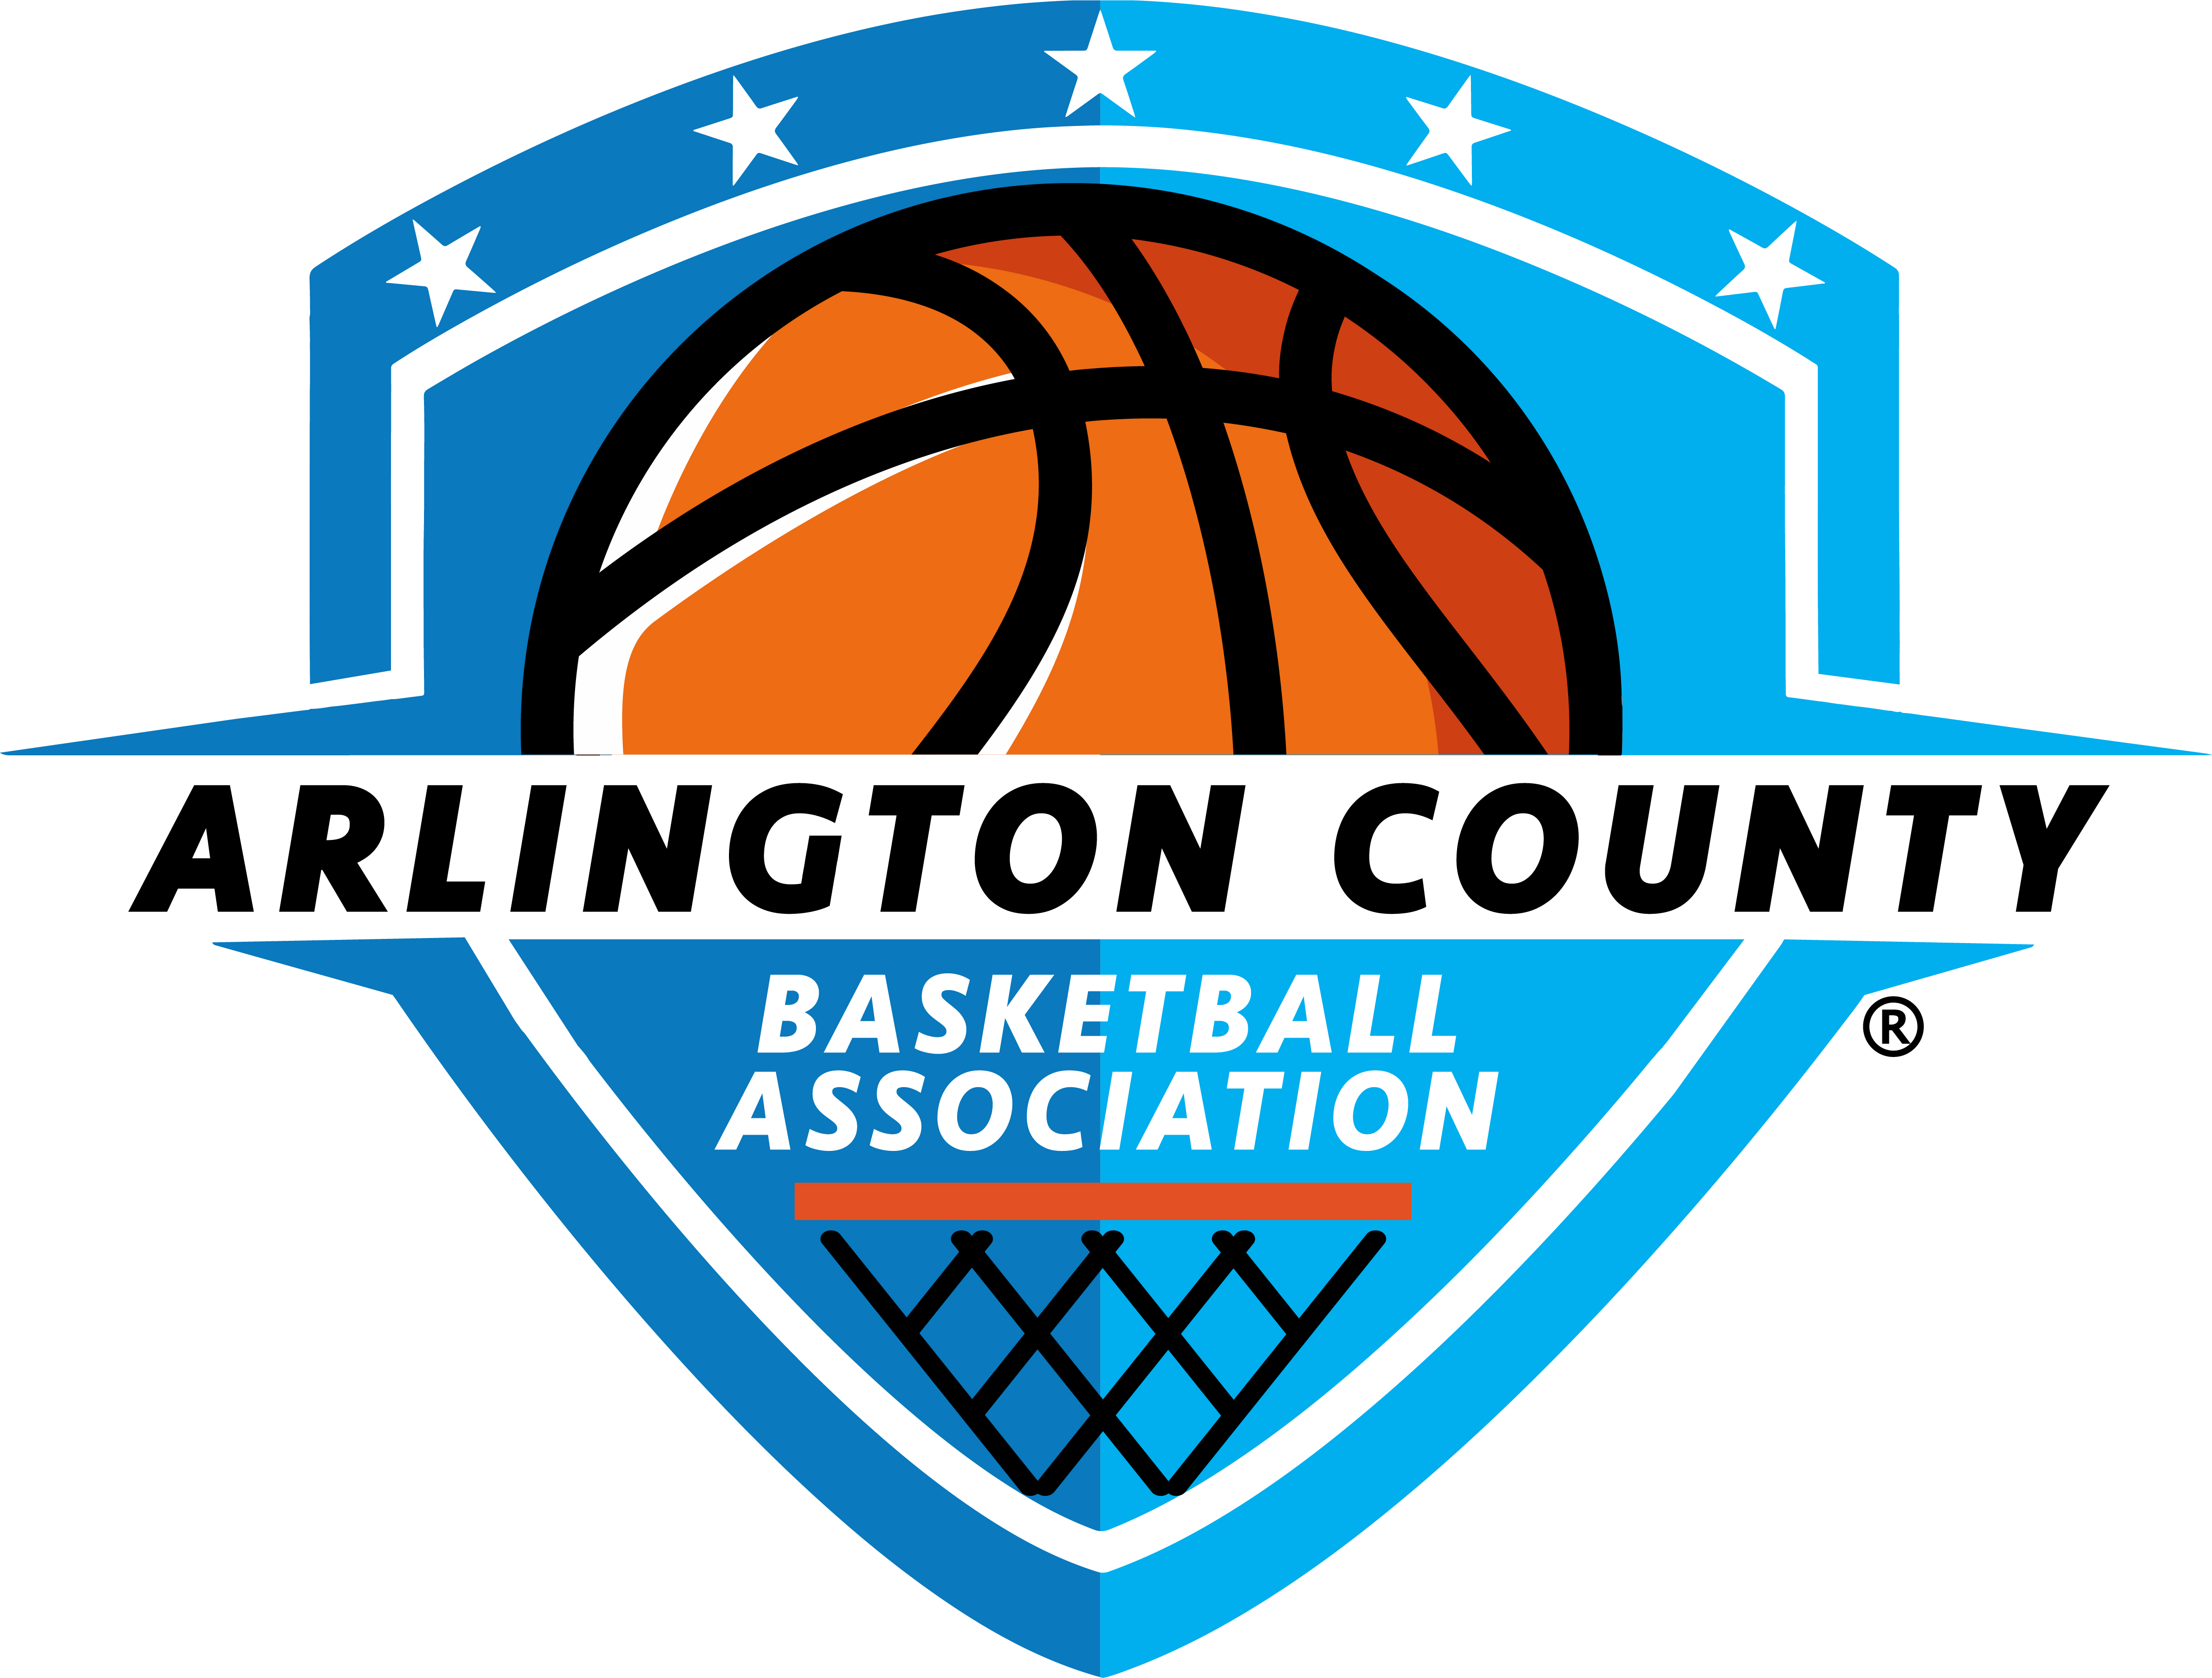 Arlington County Basketball Association